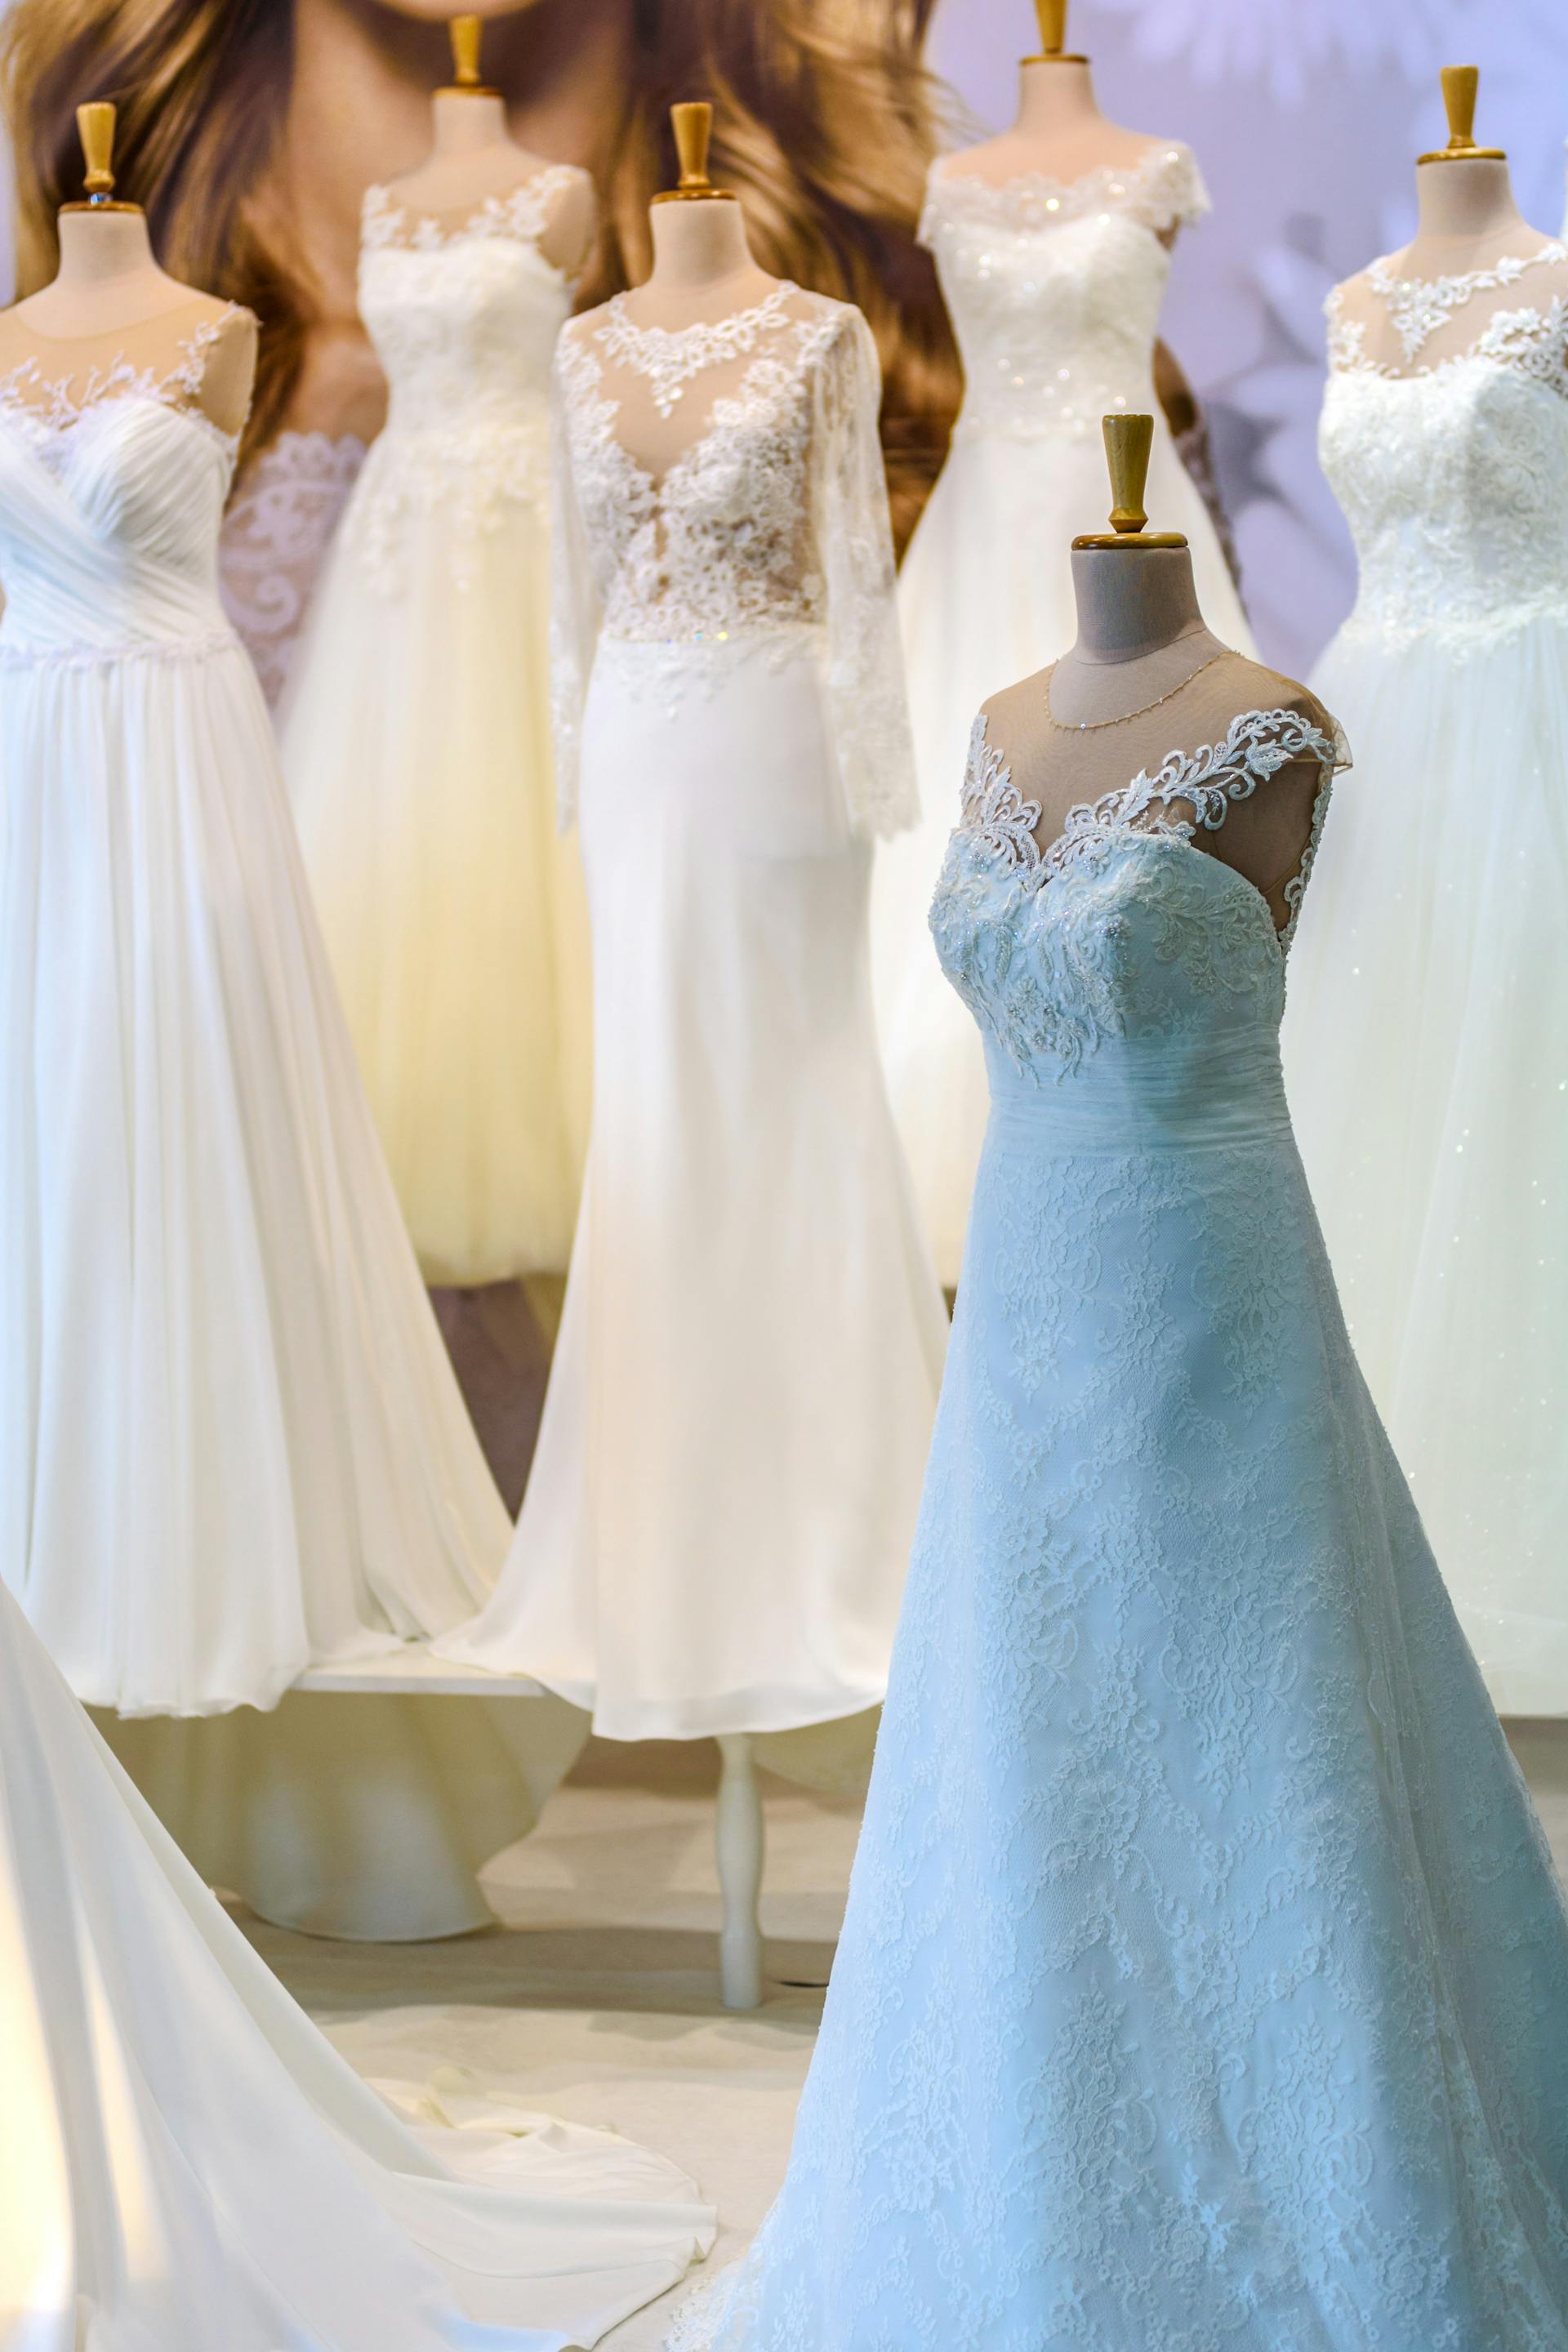 Different wedding dresses on mannequins | Source: Pexels